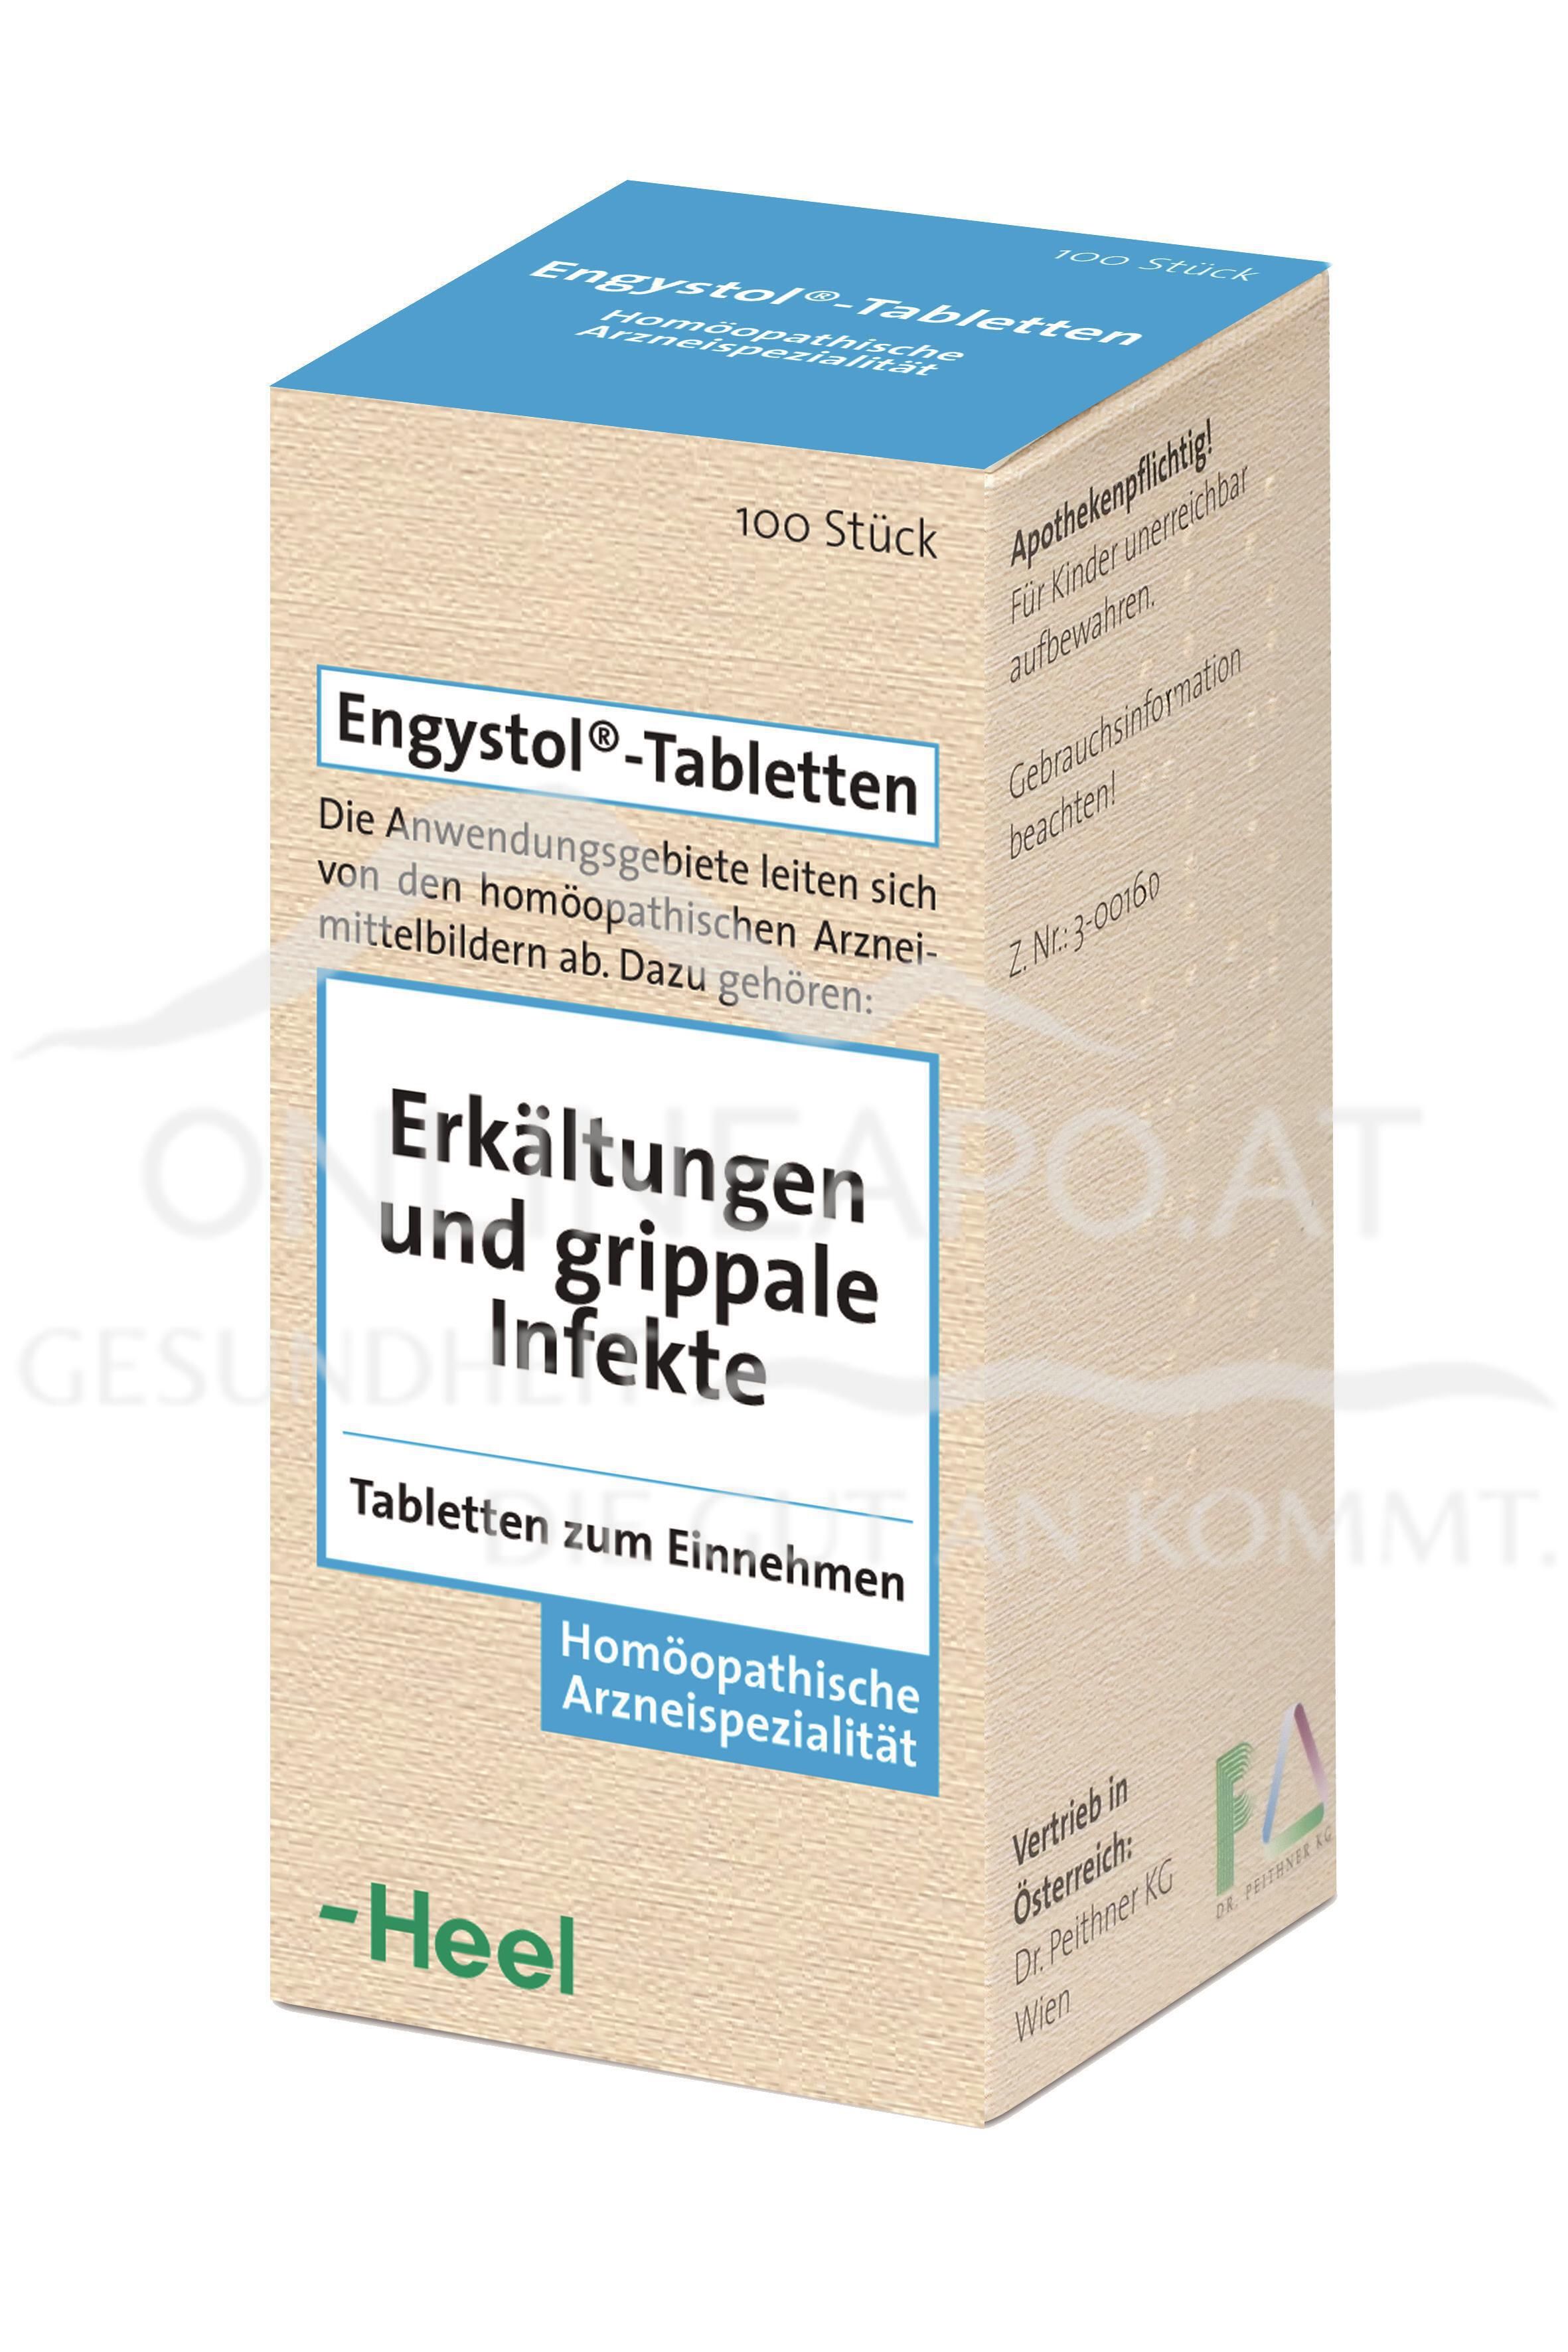 Engystol® Tabletten